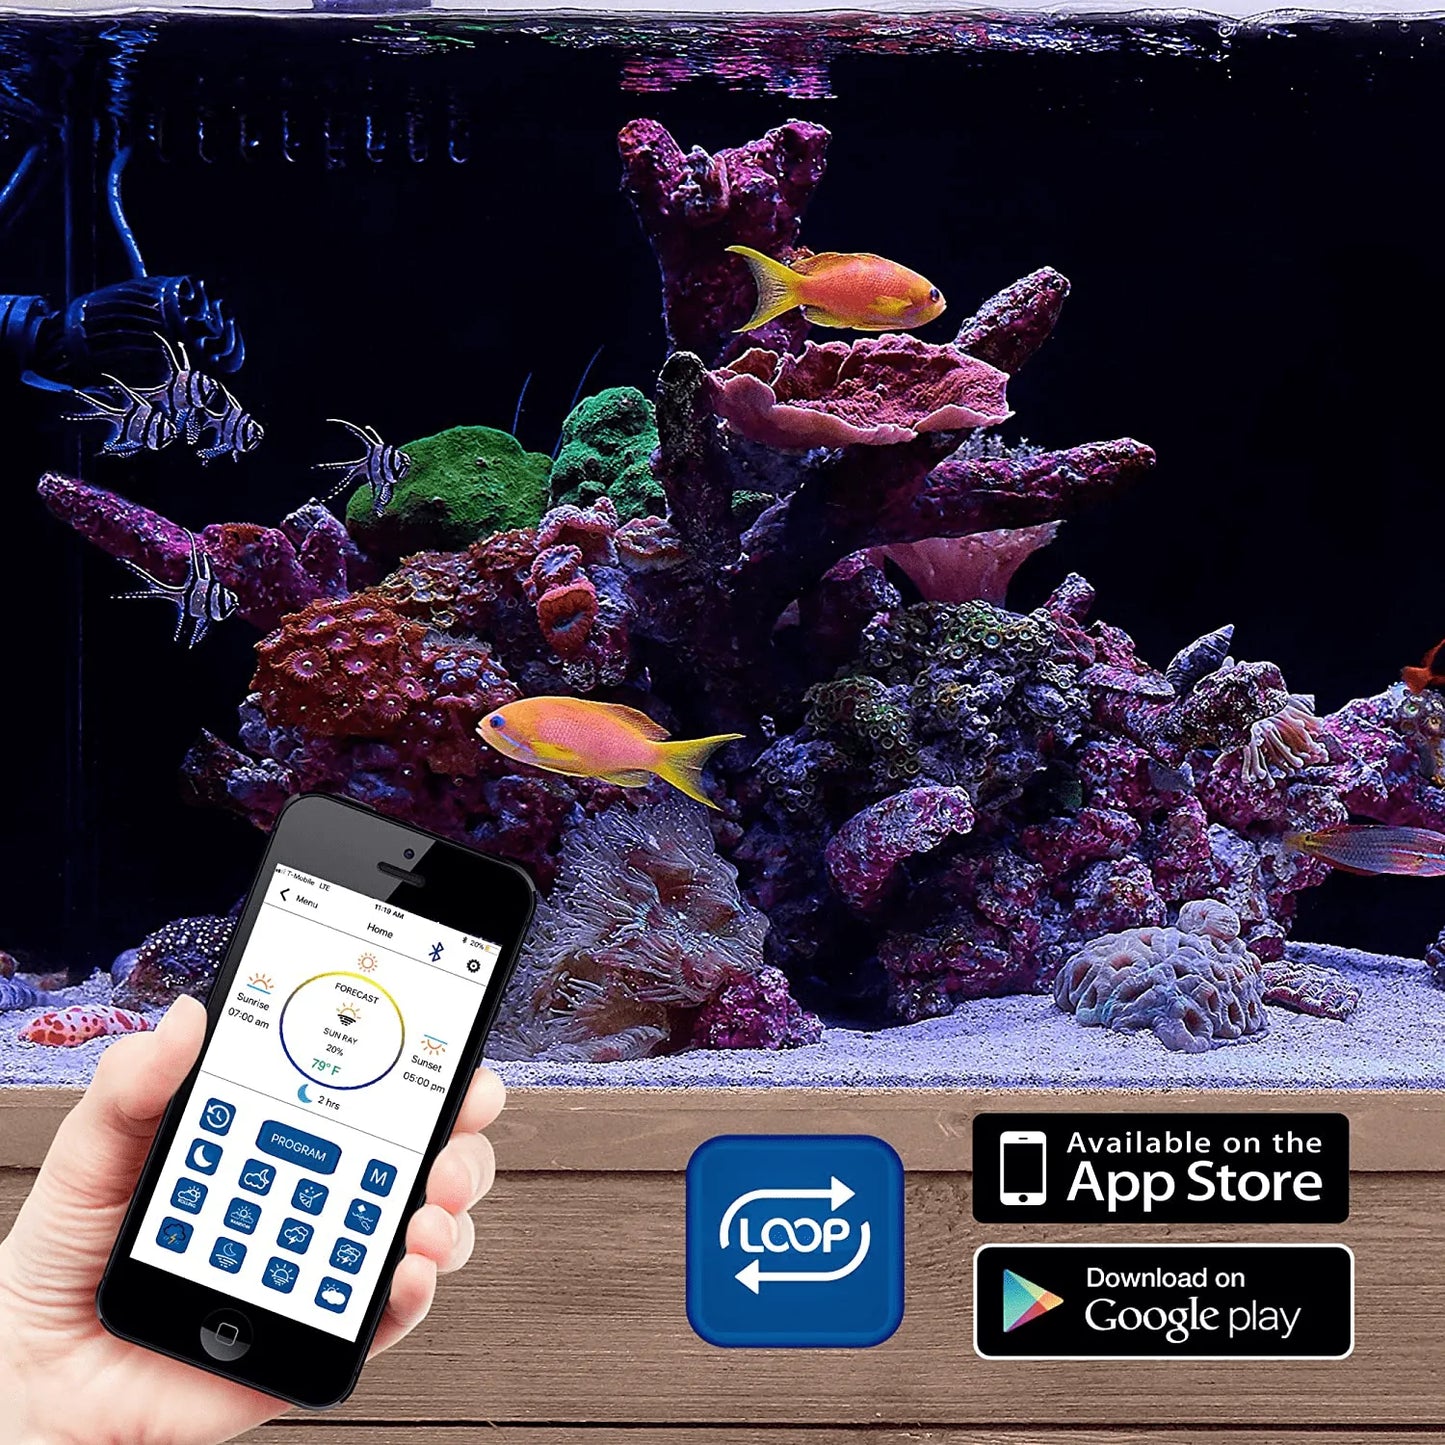 CURRENT USA Orbit Marine IC PRO Dual LED Reef Aquarium Light | Wireless Light and Pump Controller | Loop App - Bluetooth